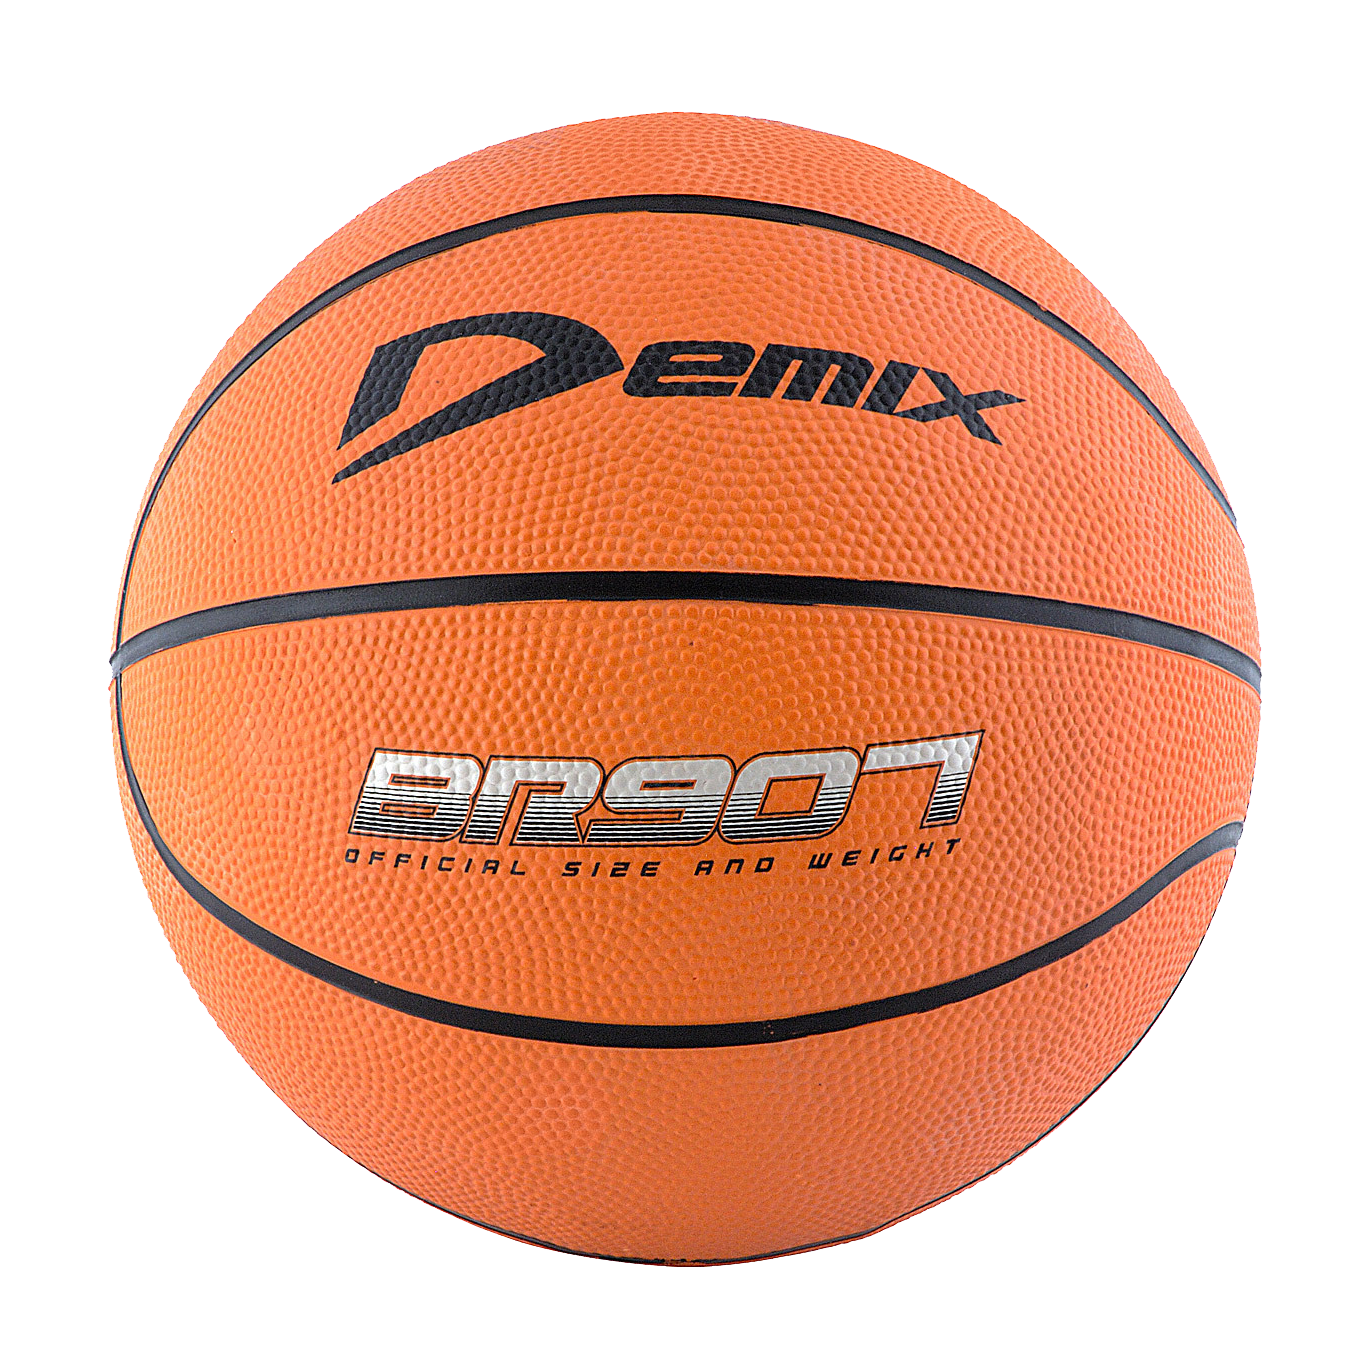 Basketball Ball PNG Image in Transparent pngteam.com